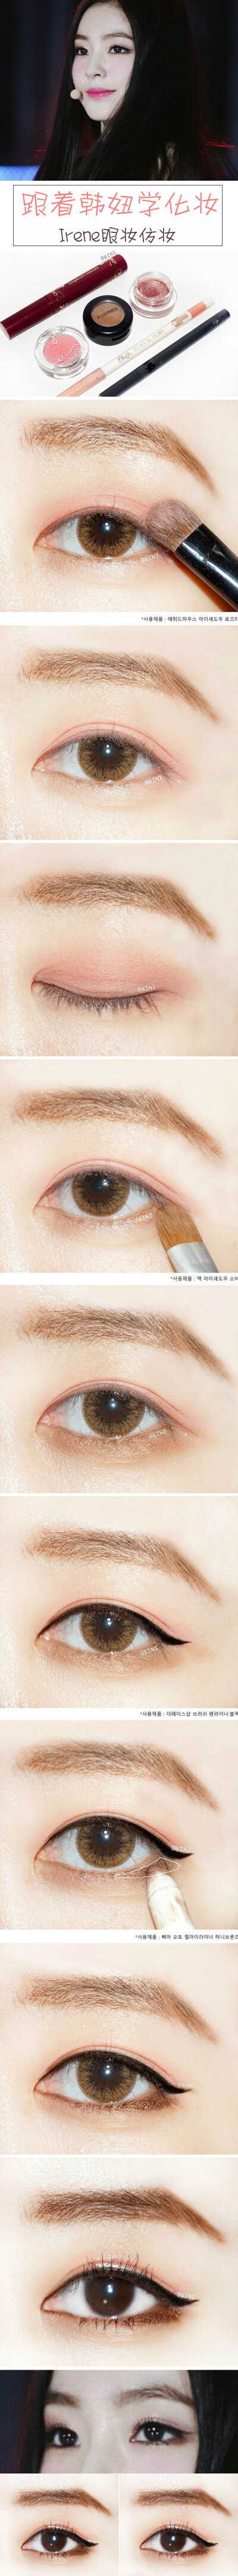 Red Velvet 中Irene眼妆仿妆一枚，下眼尾用棕色眼影晕开视觉上放大眼睛又温柔感十足